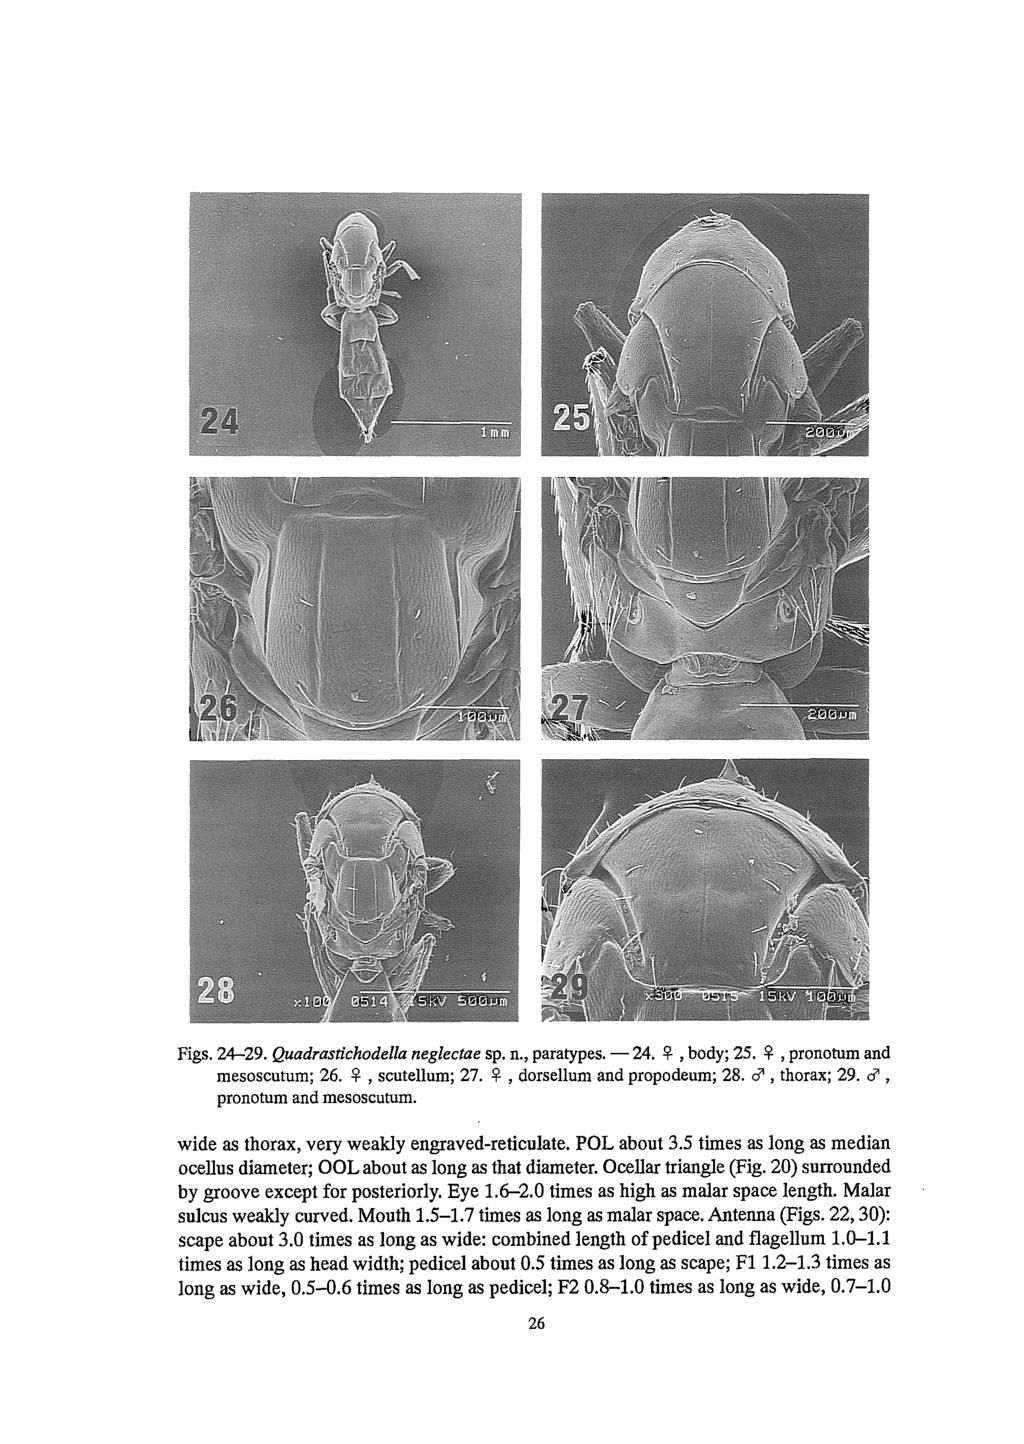 Figs. 24-29. Quadrastichodella neglectae sp. n., paratypes. - 24.!?-, body; 25.!?-,pronotum and mesoscutum; 26.!?-, scutellum; 27.!?-, dorsellum and propodeum; 28. 0', thorax; 29.